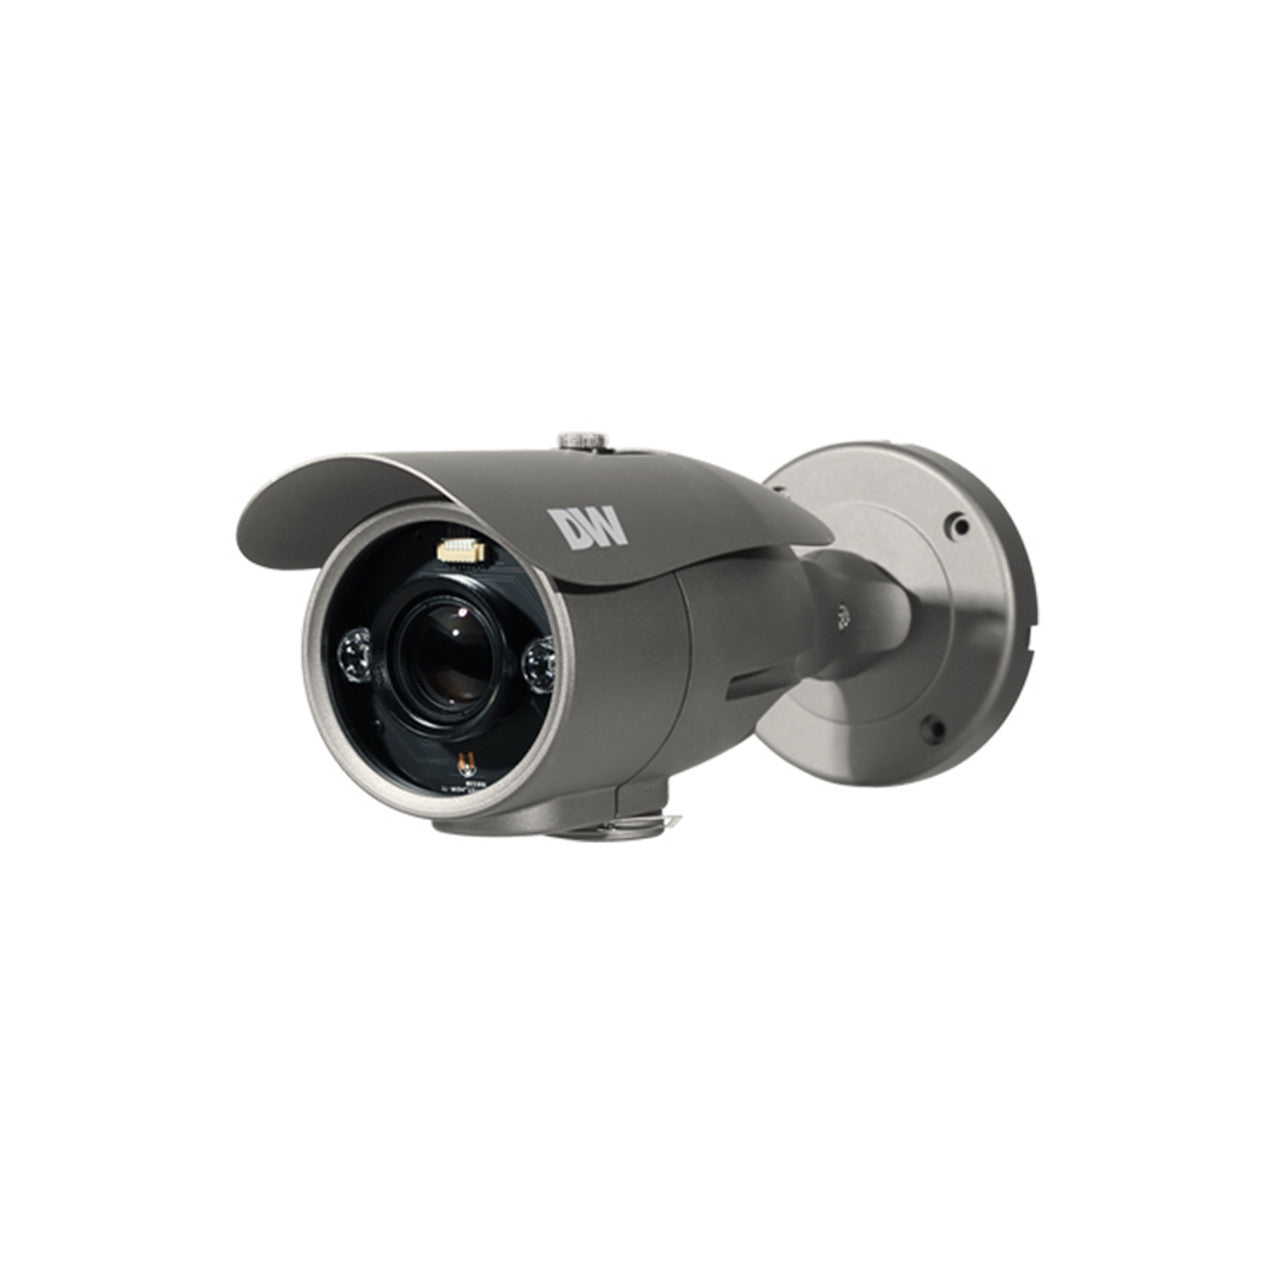 Digital Watchdog DWC-LPR650U 2.1MP Outdoor Bullet HD CCTV Security Camera